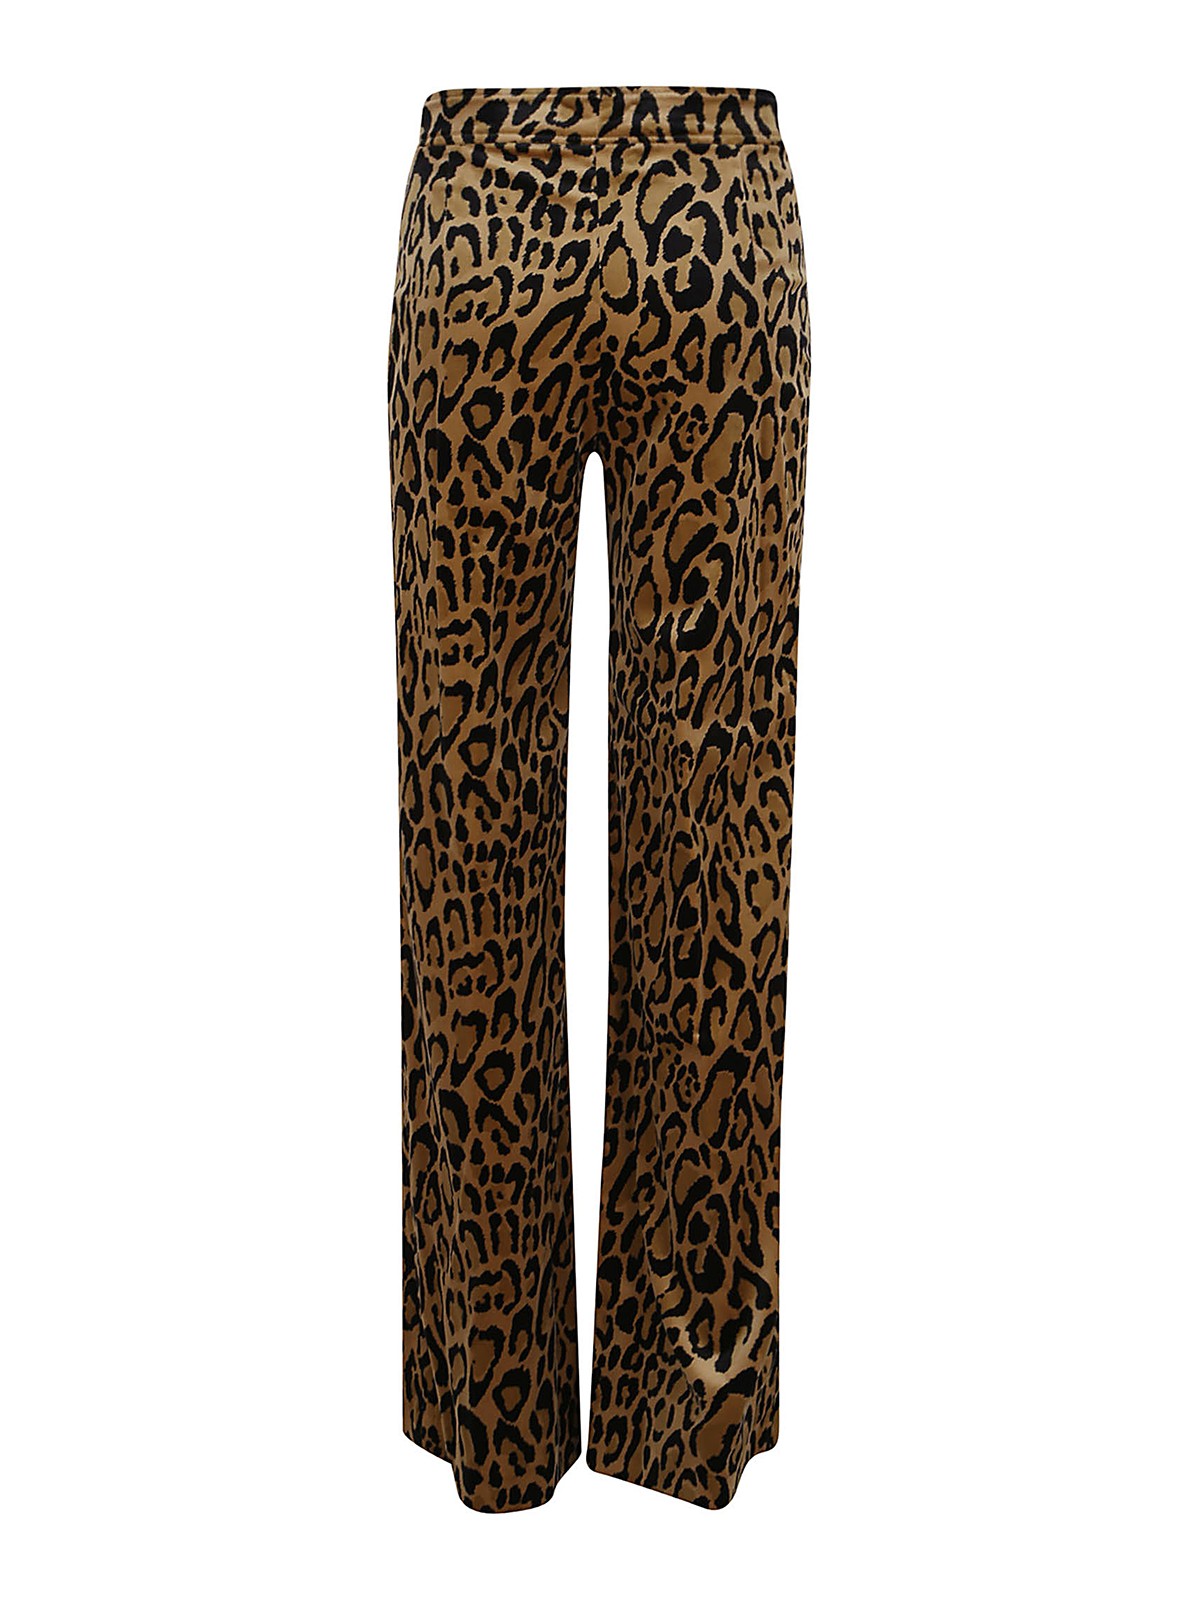 Belang lippen Zwembad Casual trousers Dries Van Noten - Leopard patterned pants - 2220109285259101